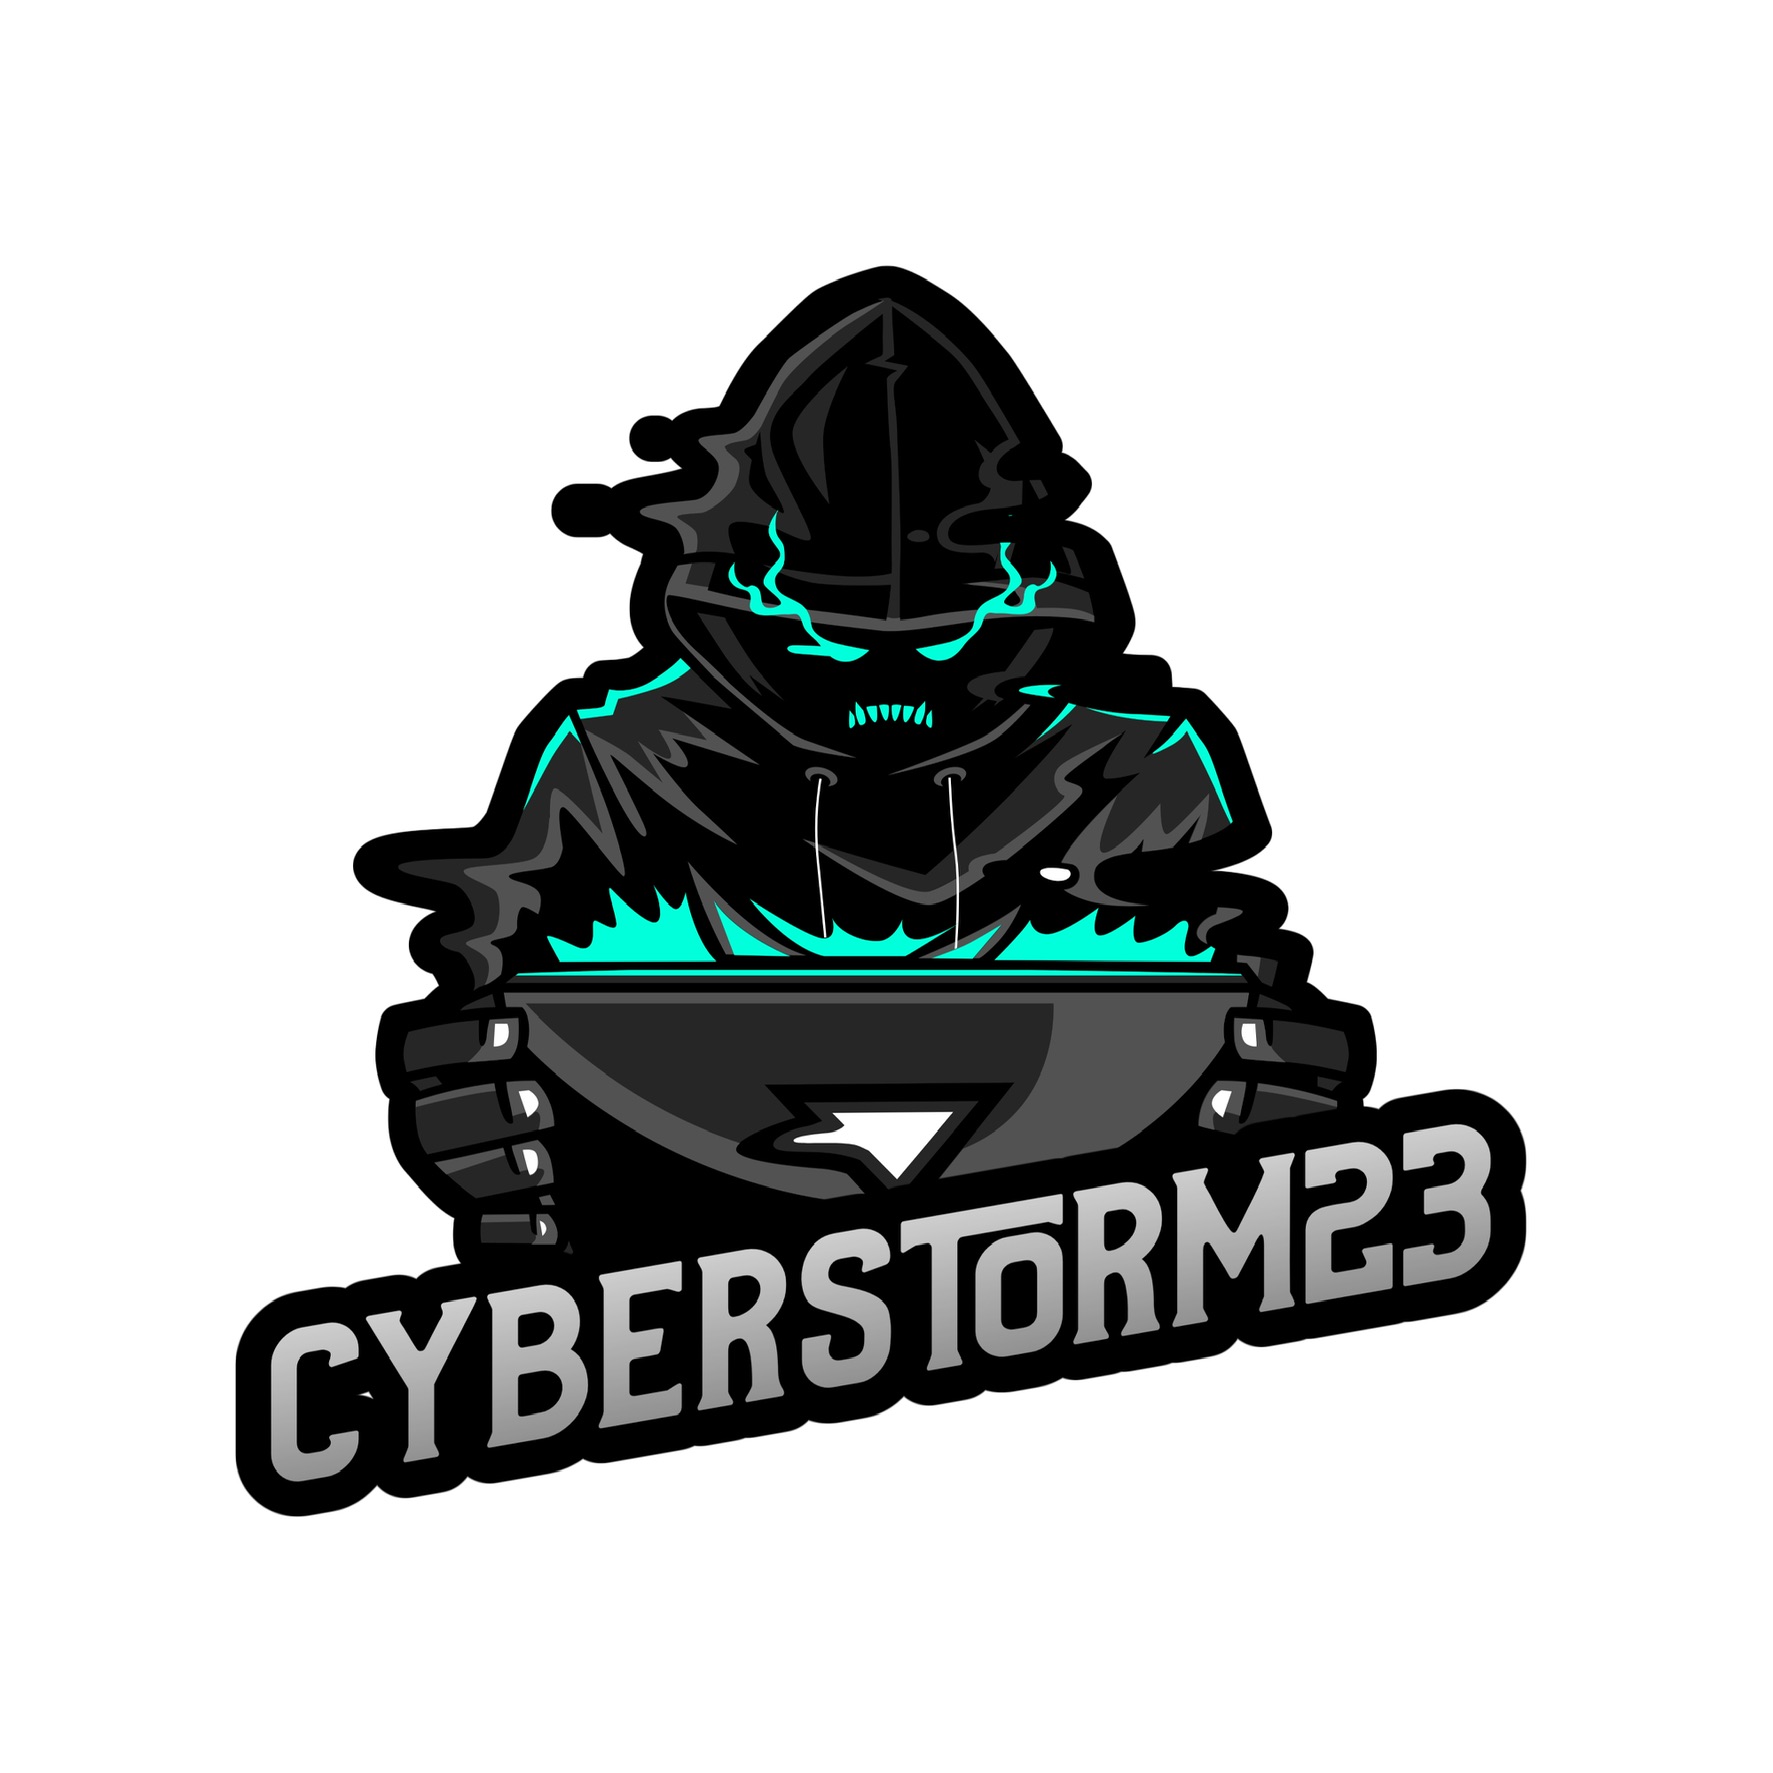 Cyberstorm23